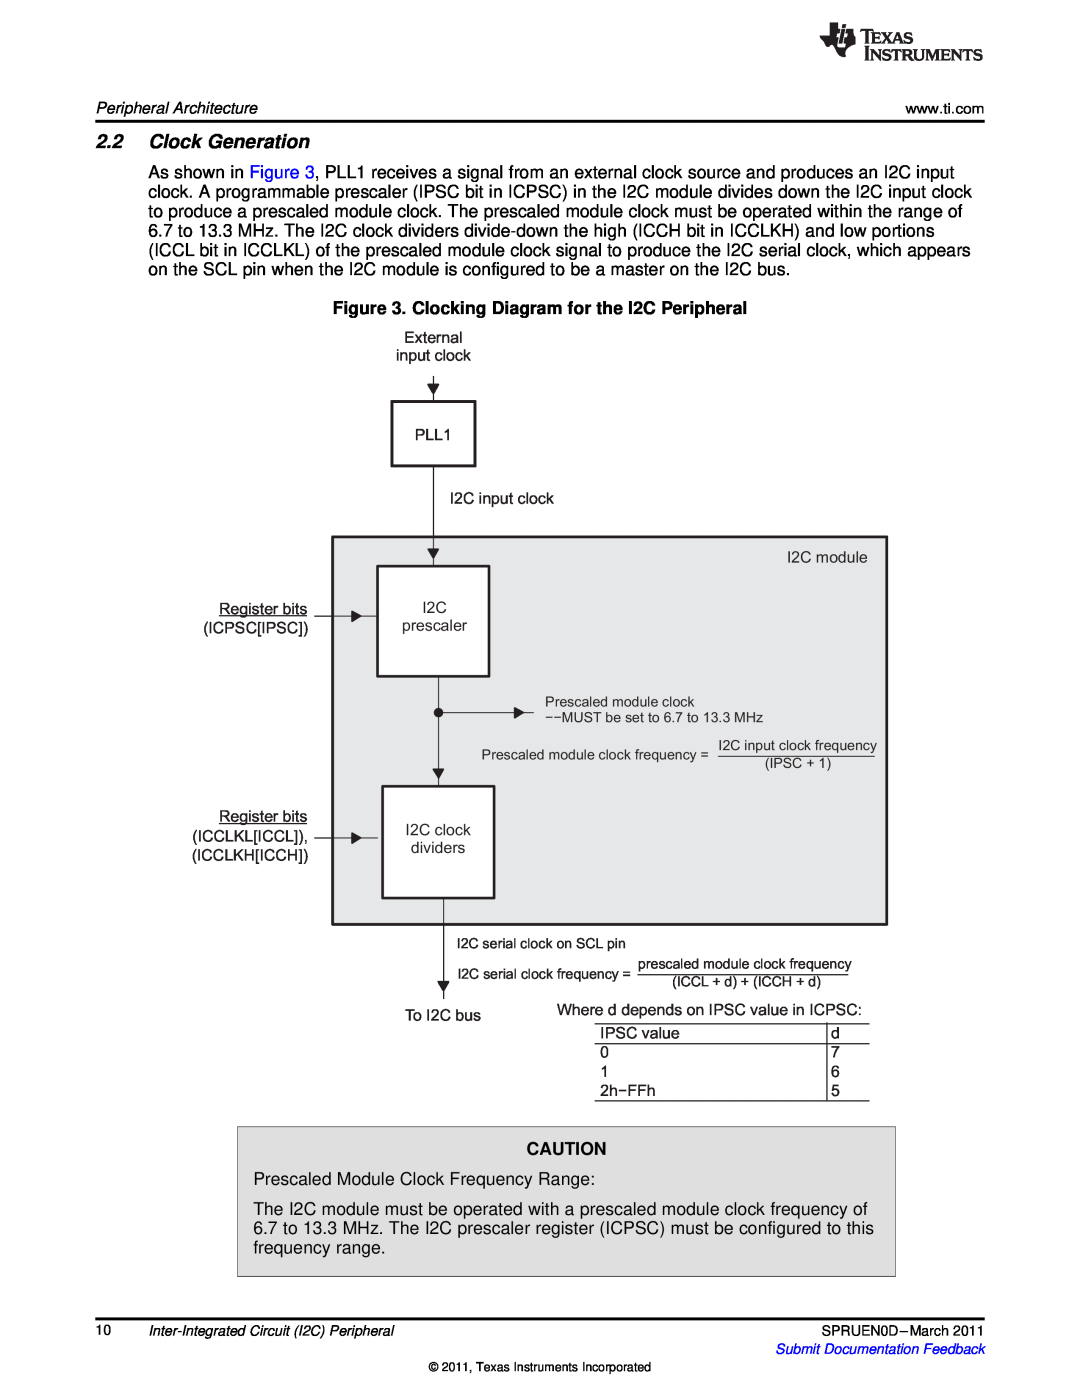 Texas Instruments TMS320C642X manual 2.2Clock Generation, Clocking Diagram for the I2C Peripheral 